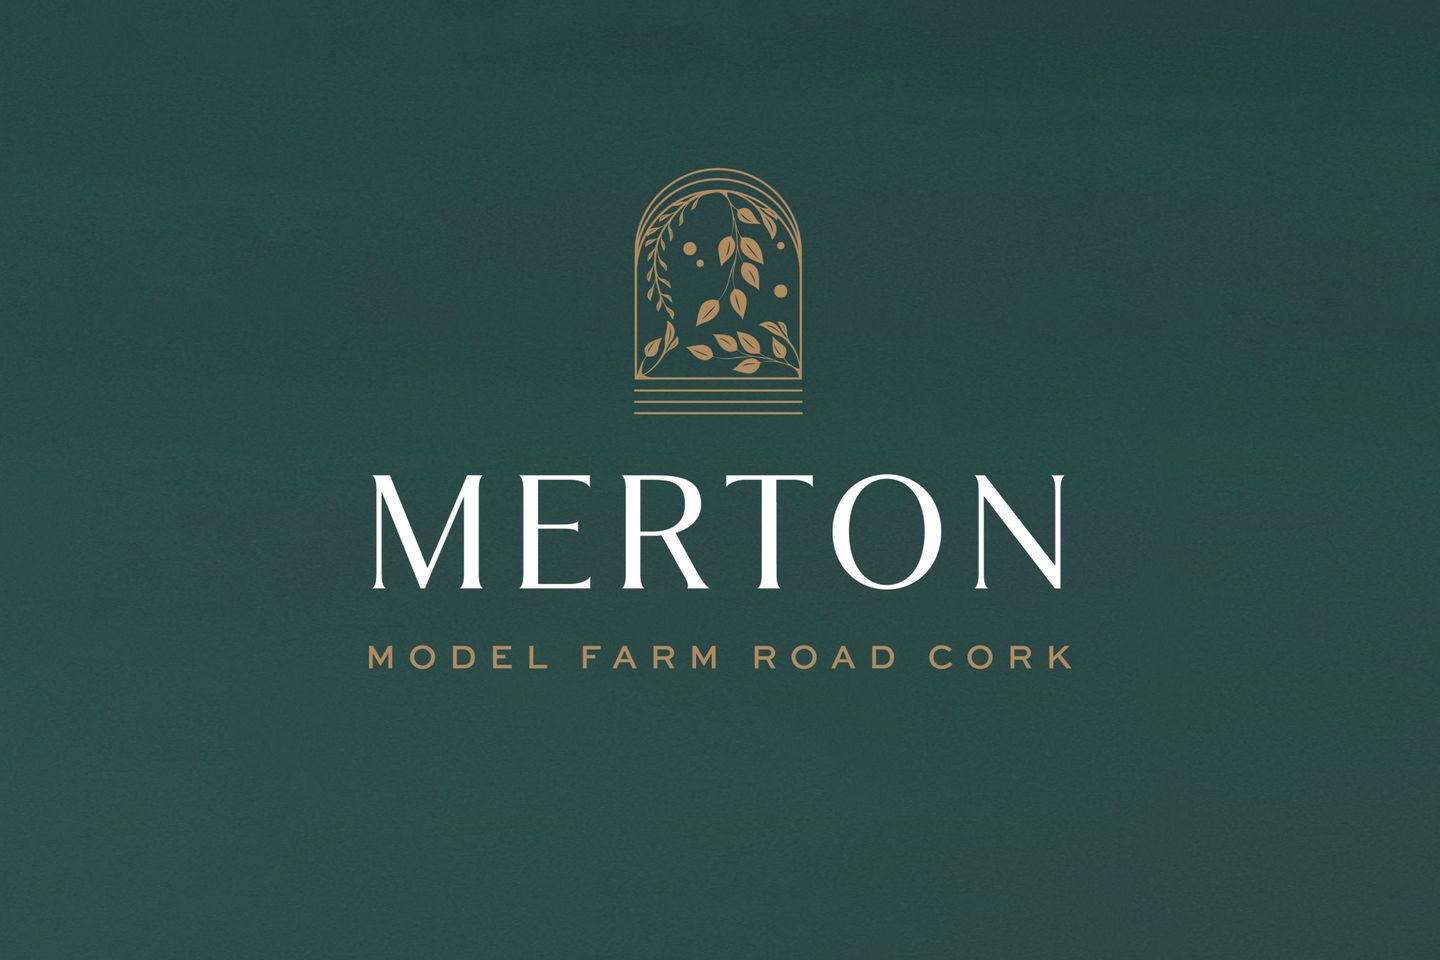 Four Bed Semi-Detached, Merton, Model Farm Road, Co. Cork, T12NHF6